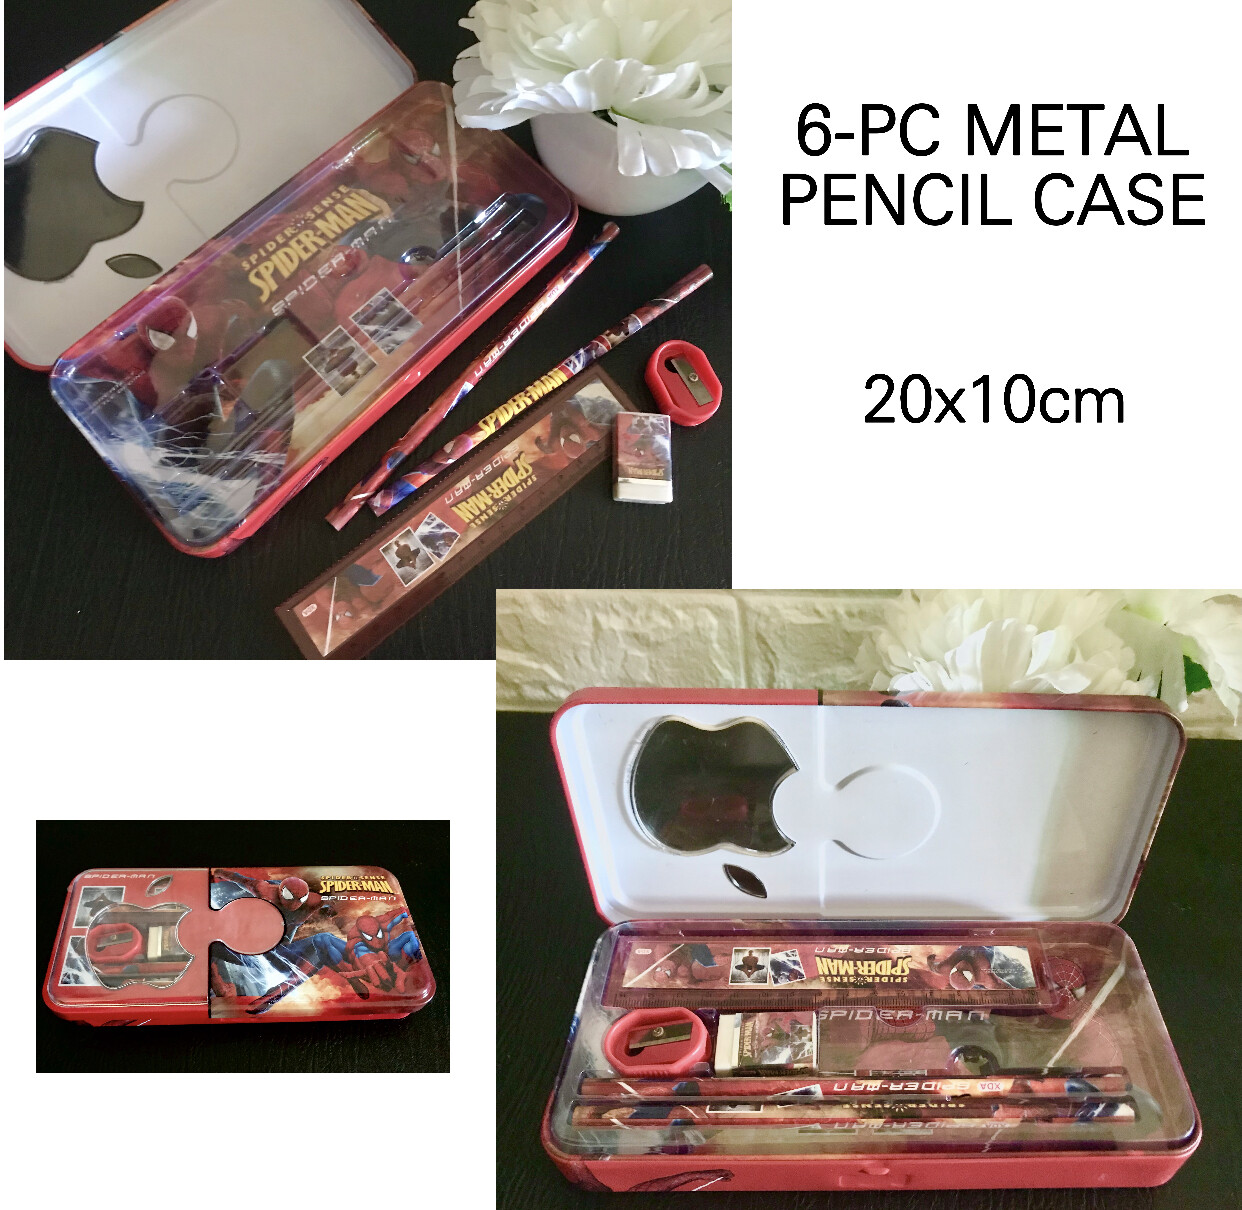 6-Pc Pencil Case